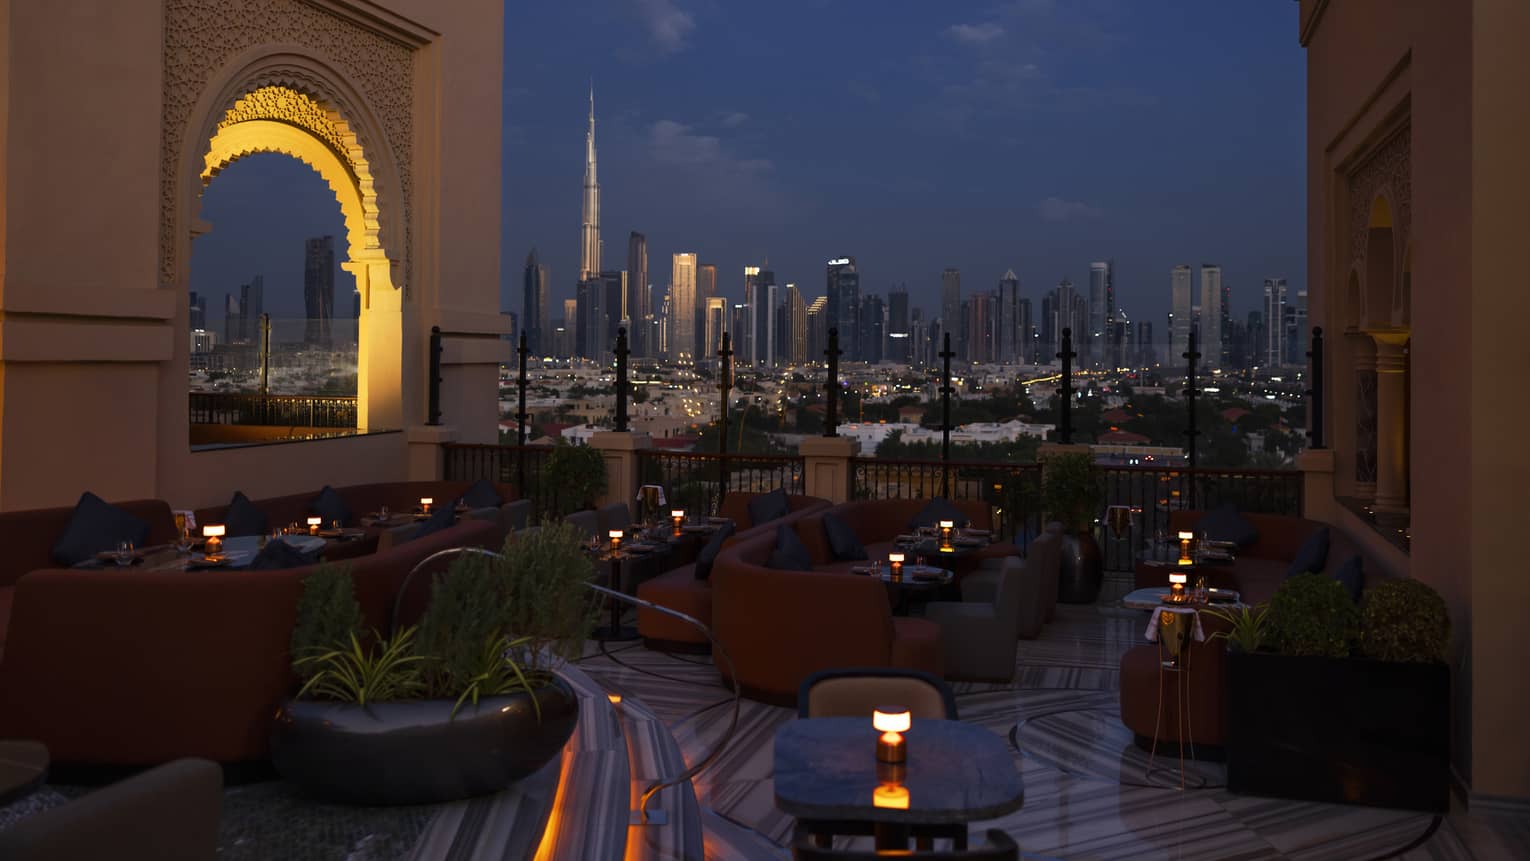 Nightime view of rooftop lounge overlooking the Dubai skyline